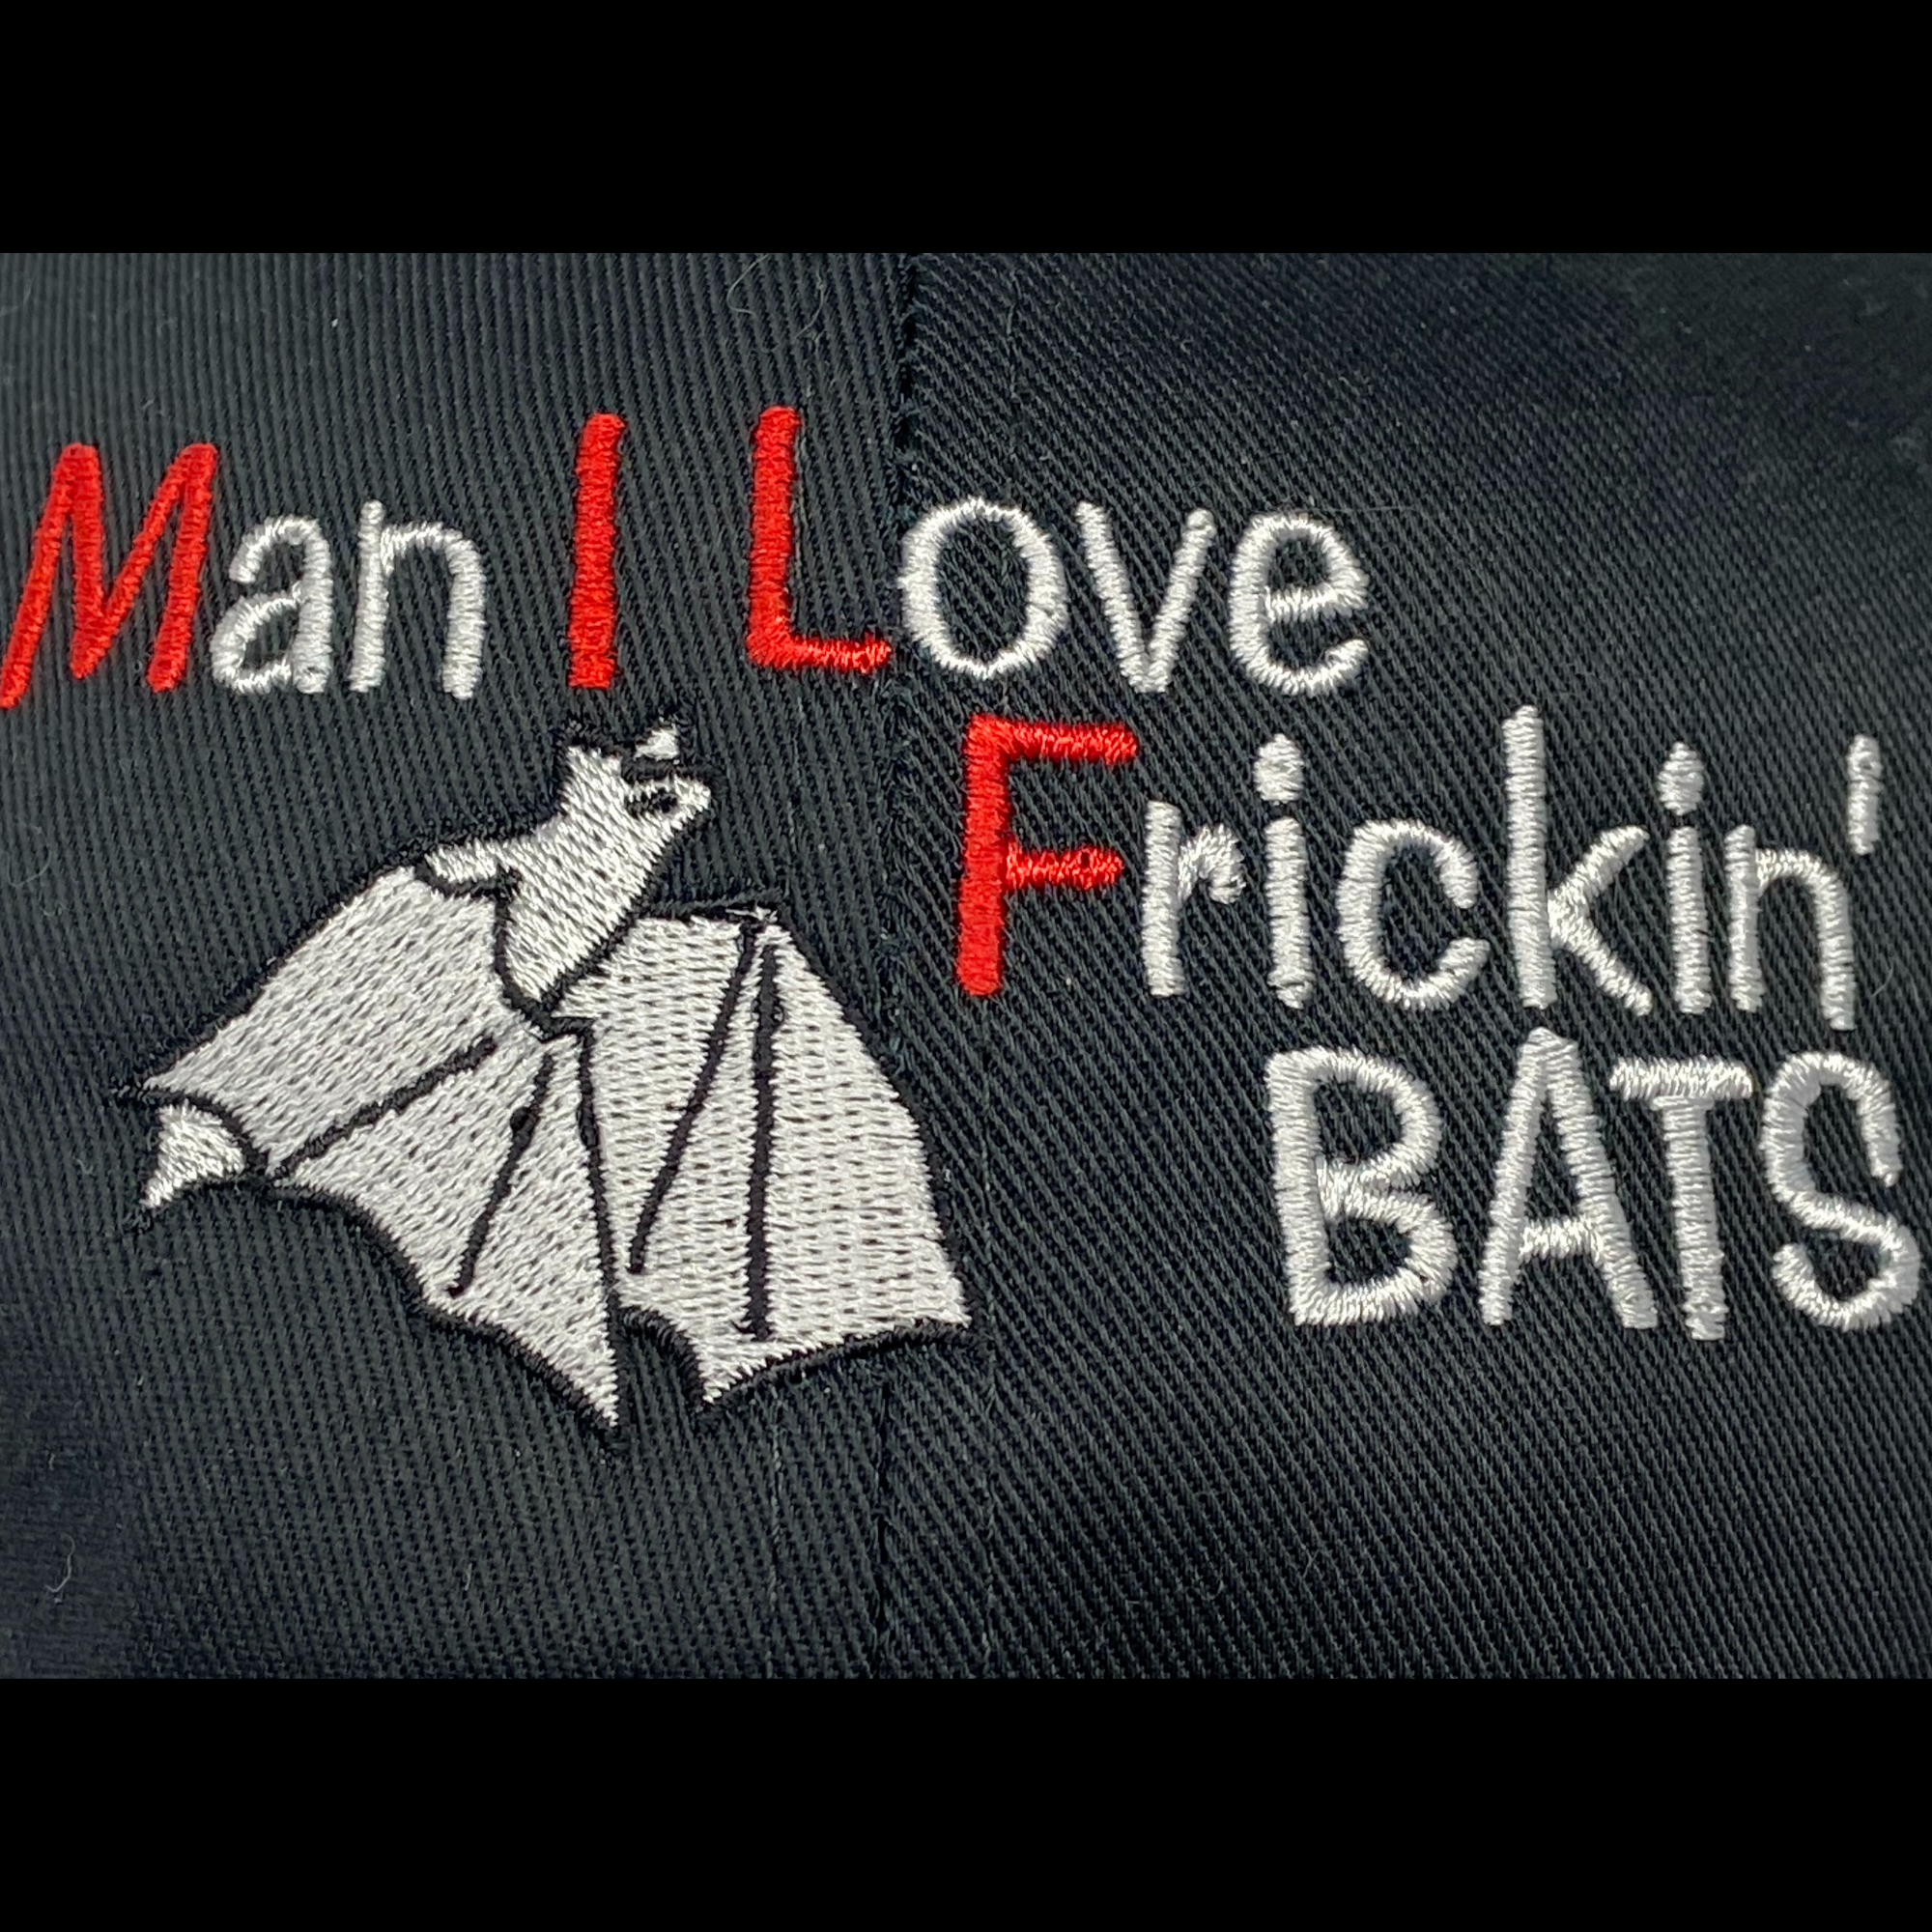 Man I Love Frickin' Bats MILF Embroidered Dad Hat